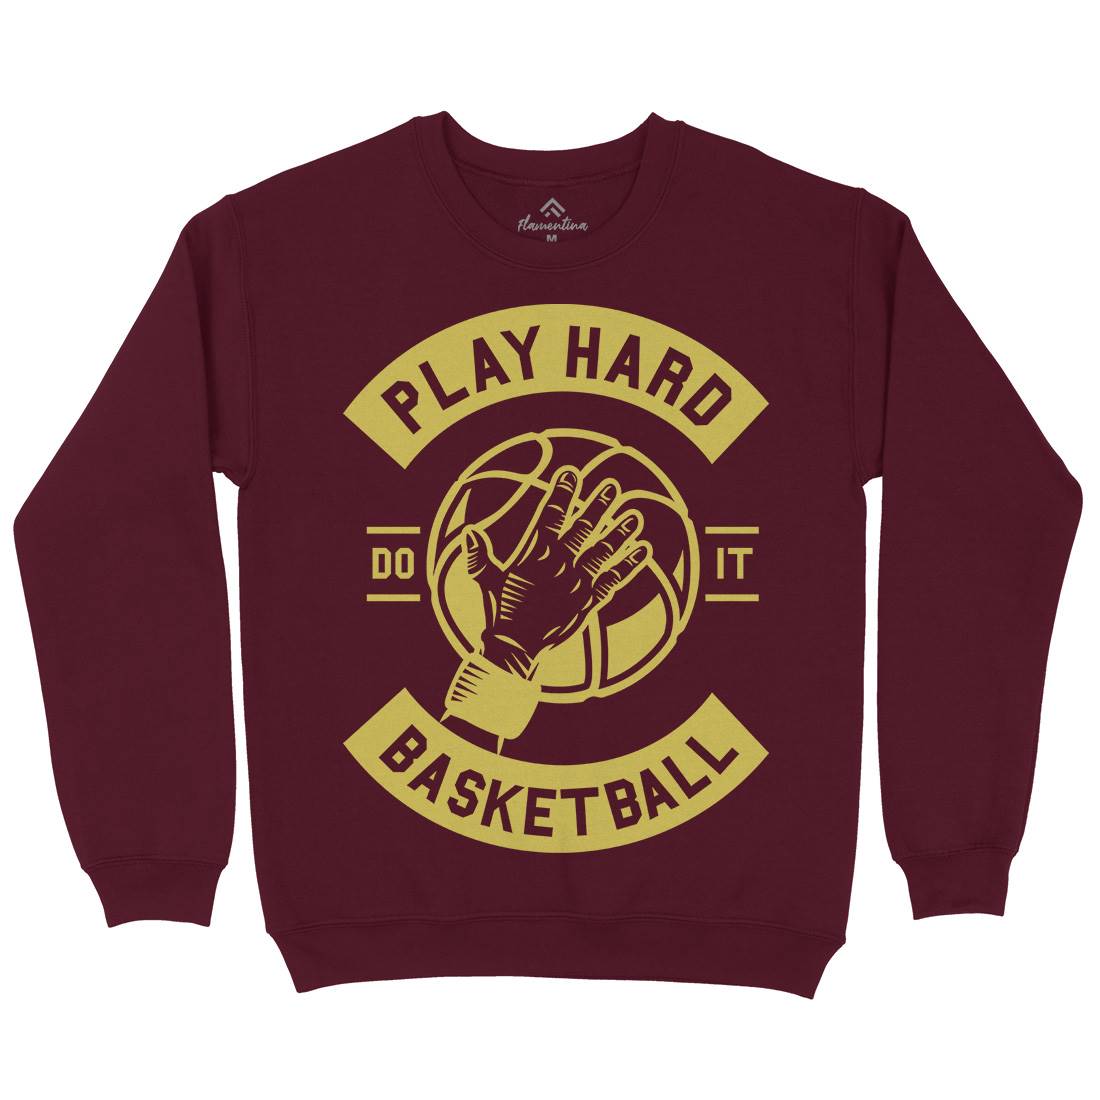 Play Hard Basketball Kids Crew Neck Sweatshirt Sport A261